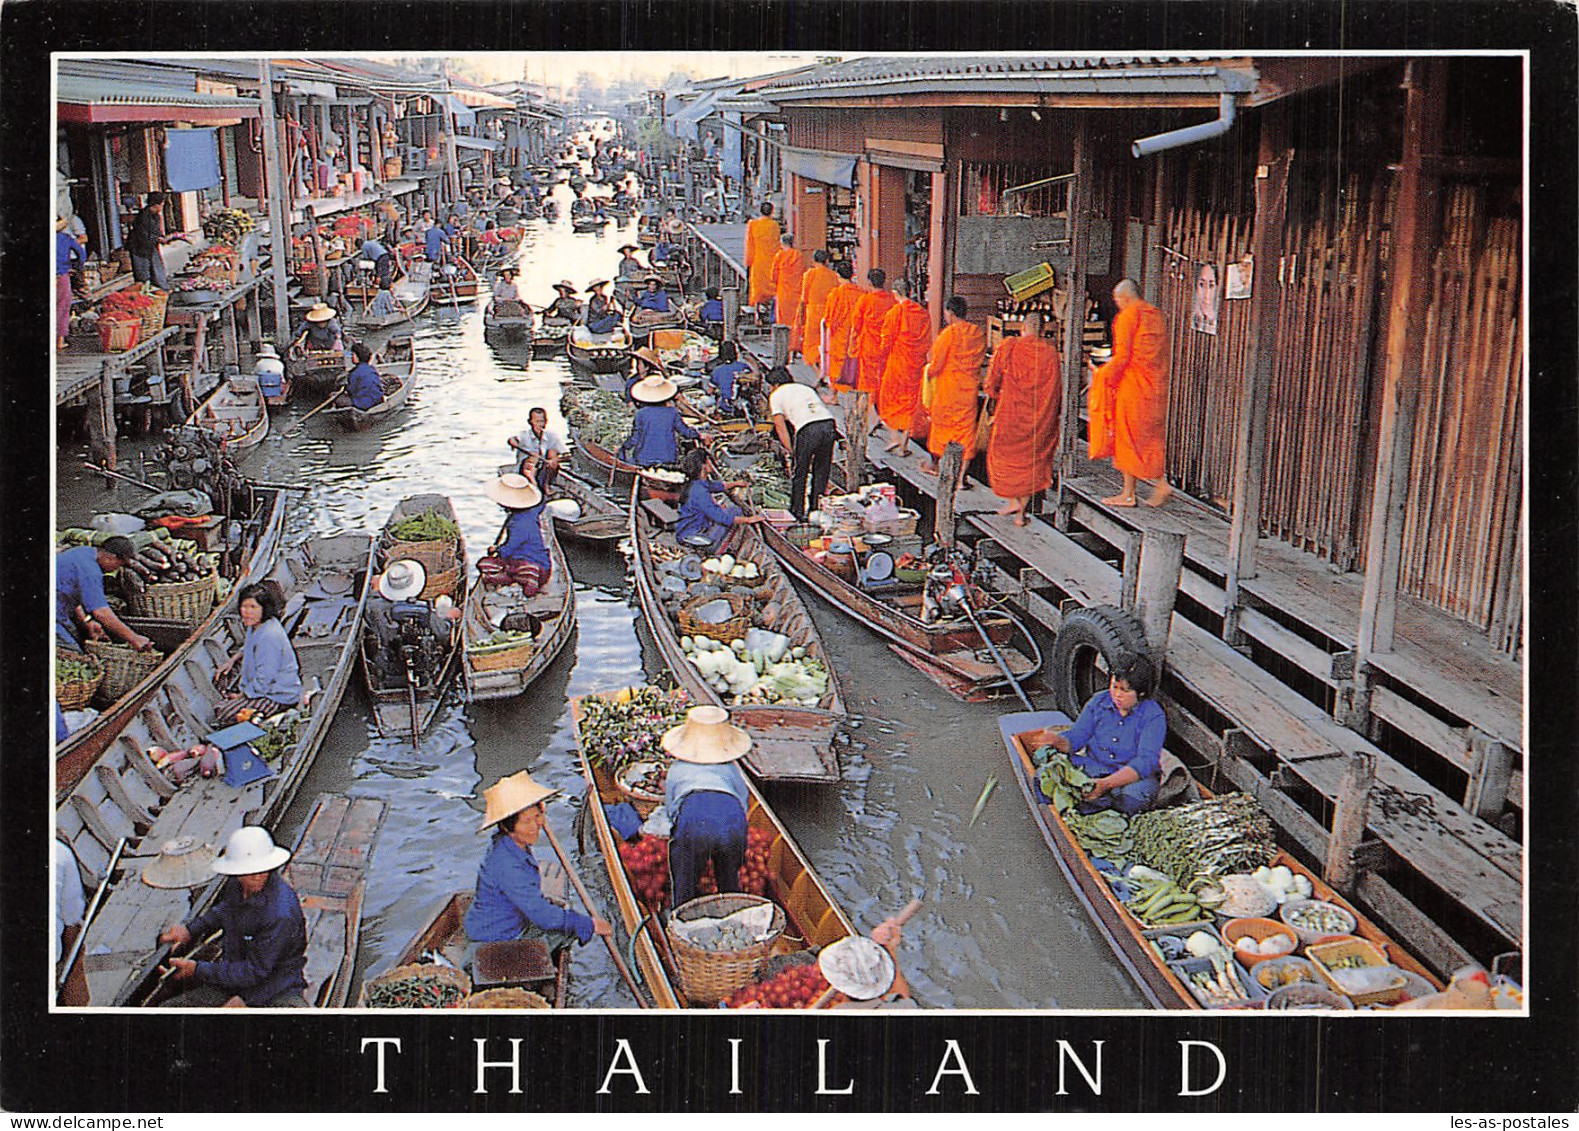 THAILAND MARKET - Thaïlande